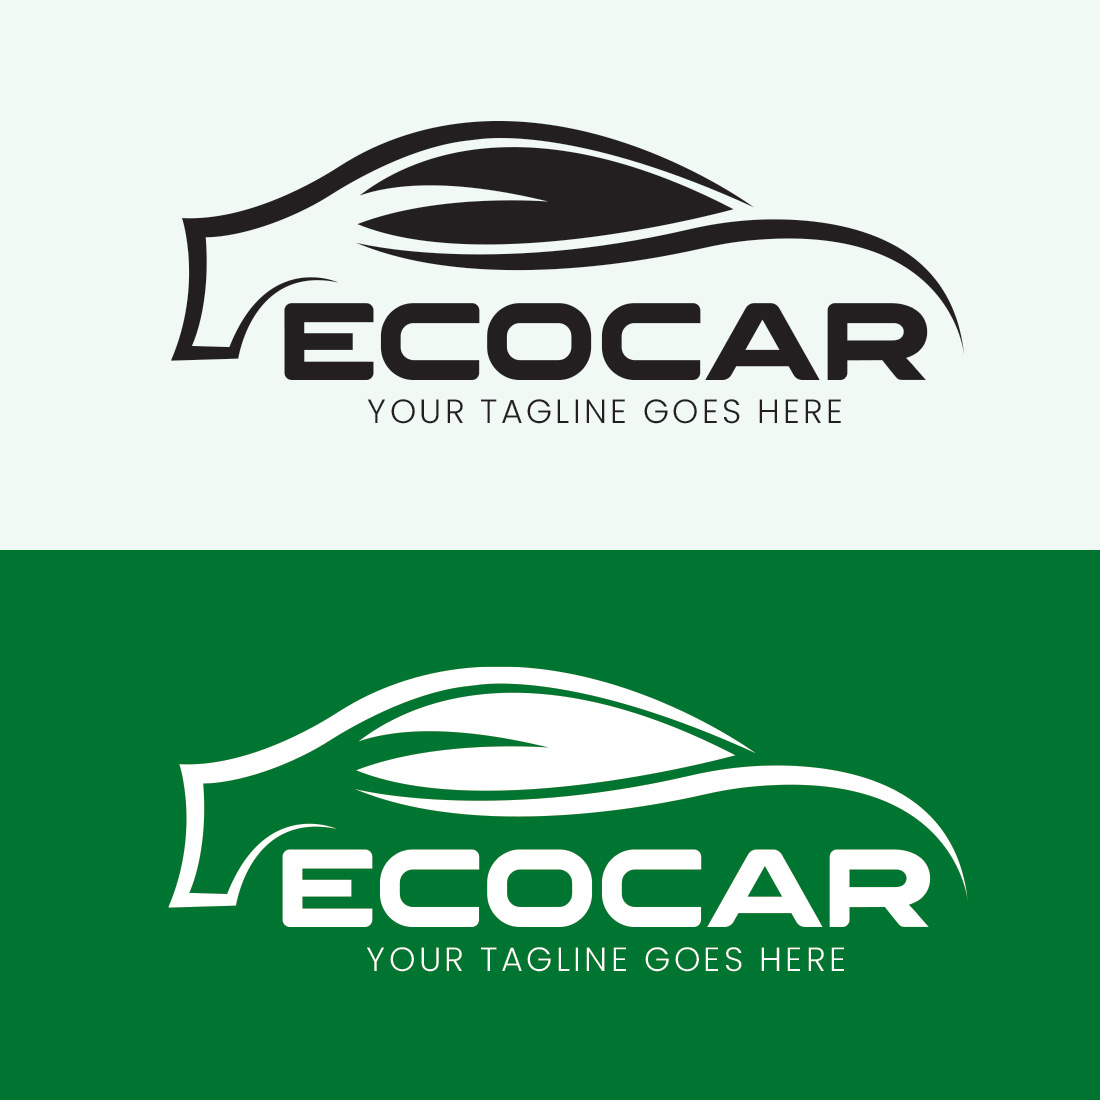 Green Eco Car Logo Design Template cover image.